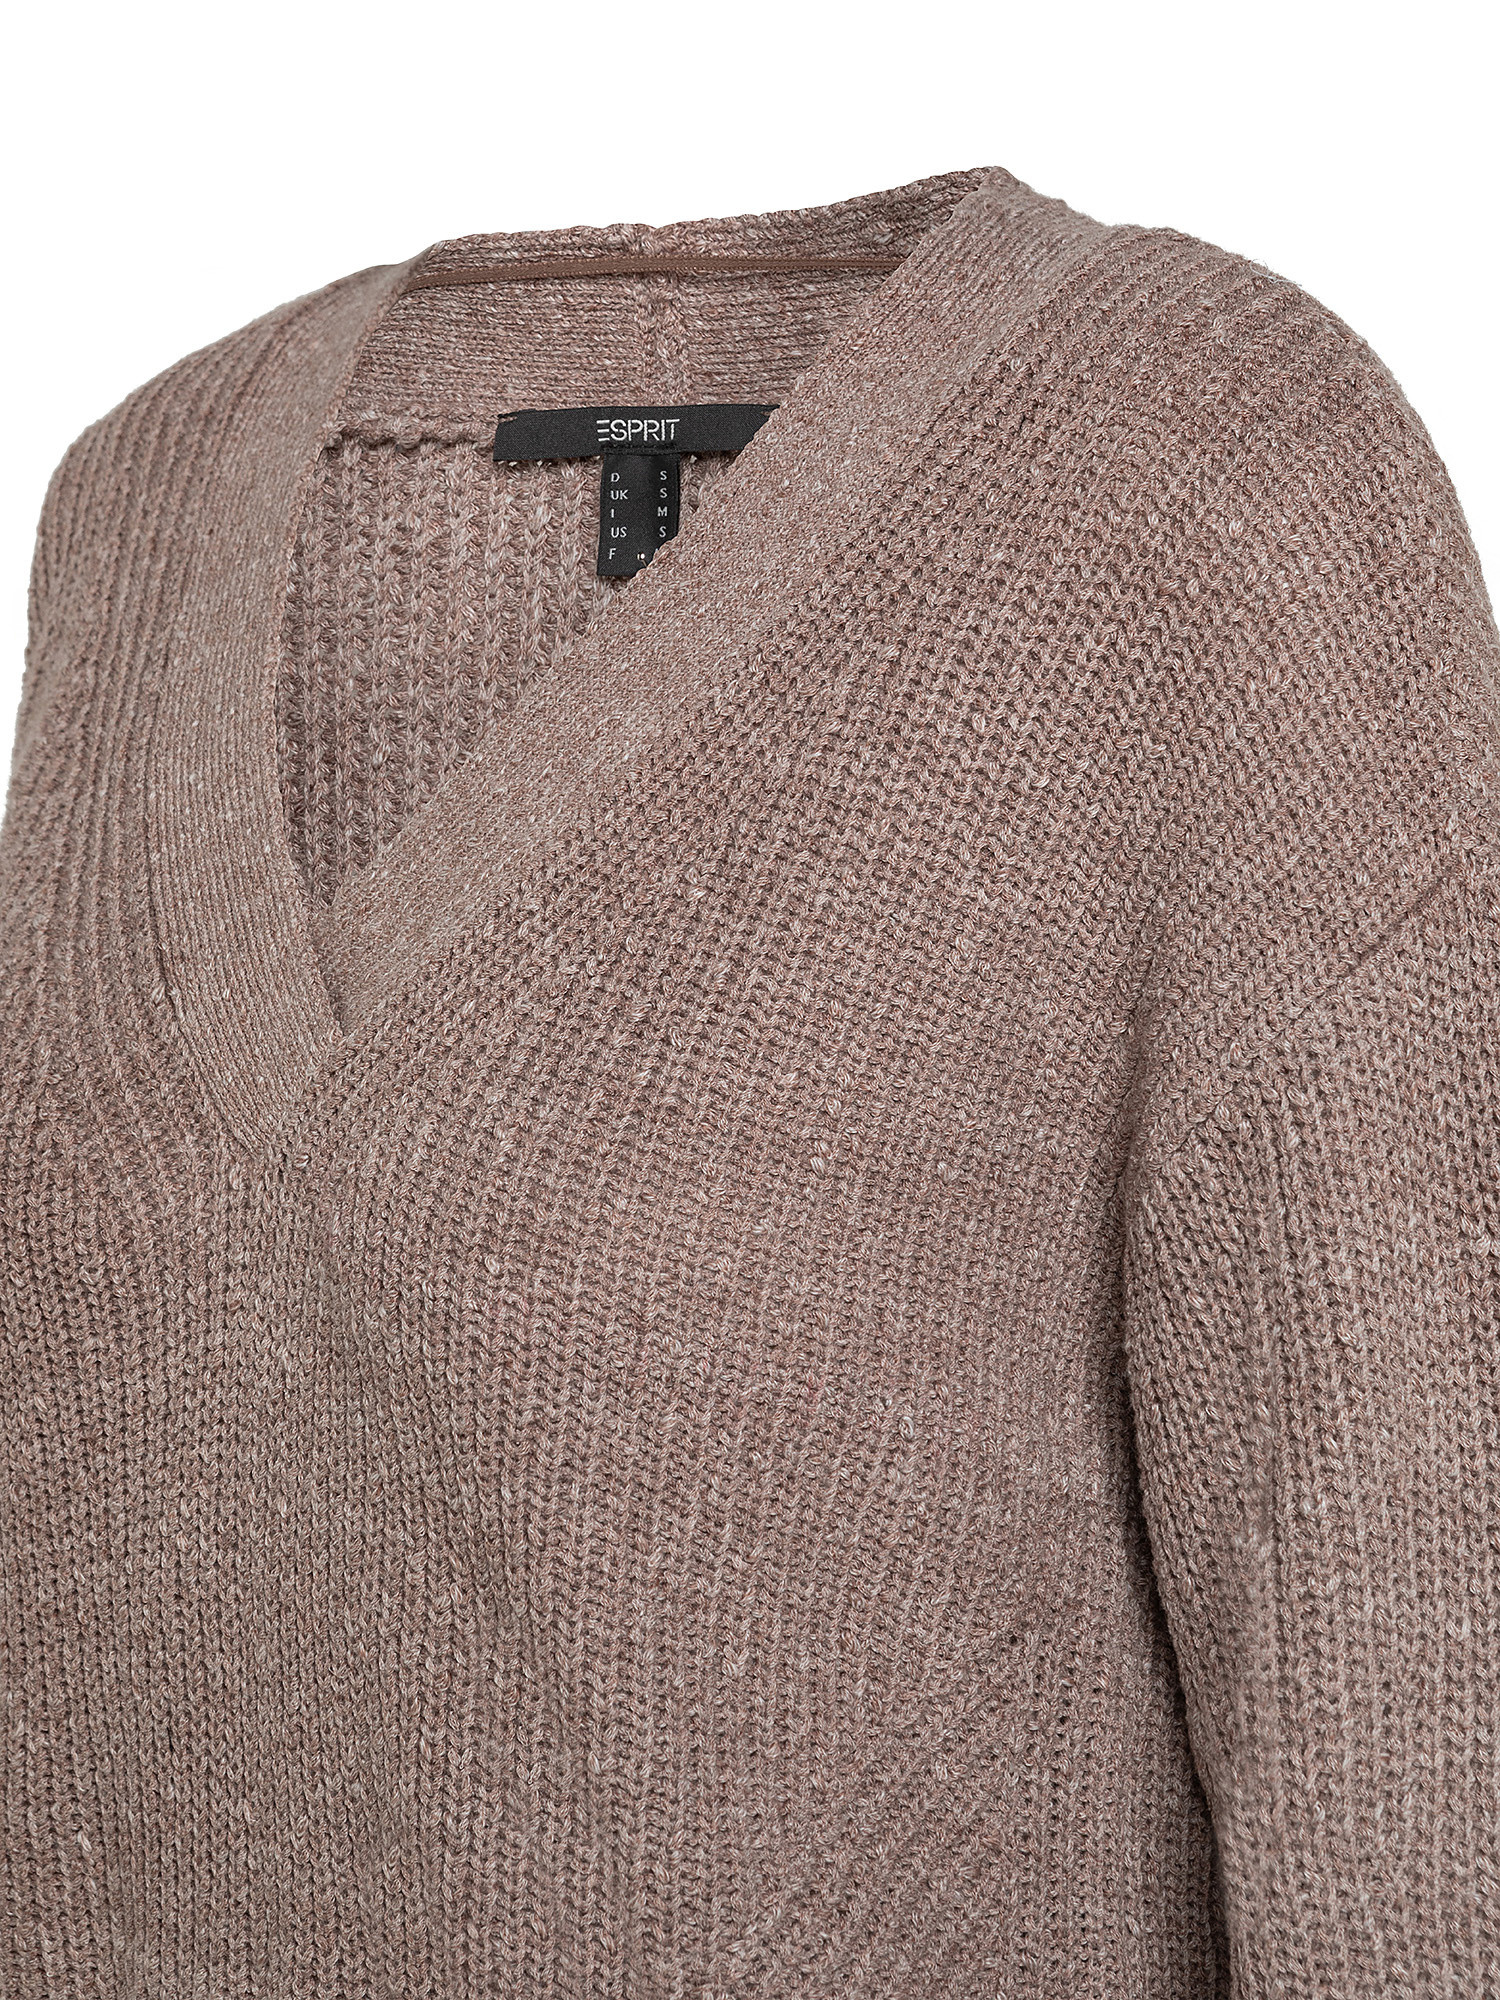 Pullover a maglia larga in misto cotone, Marrone, large image number 2